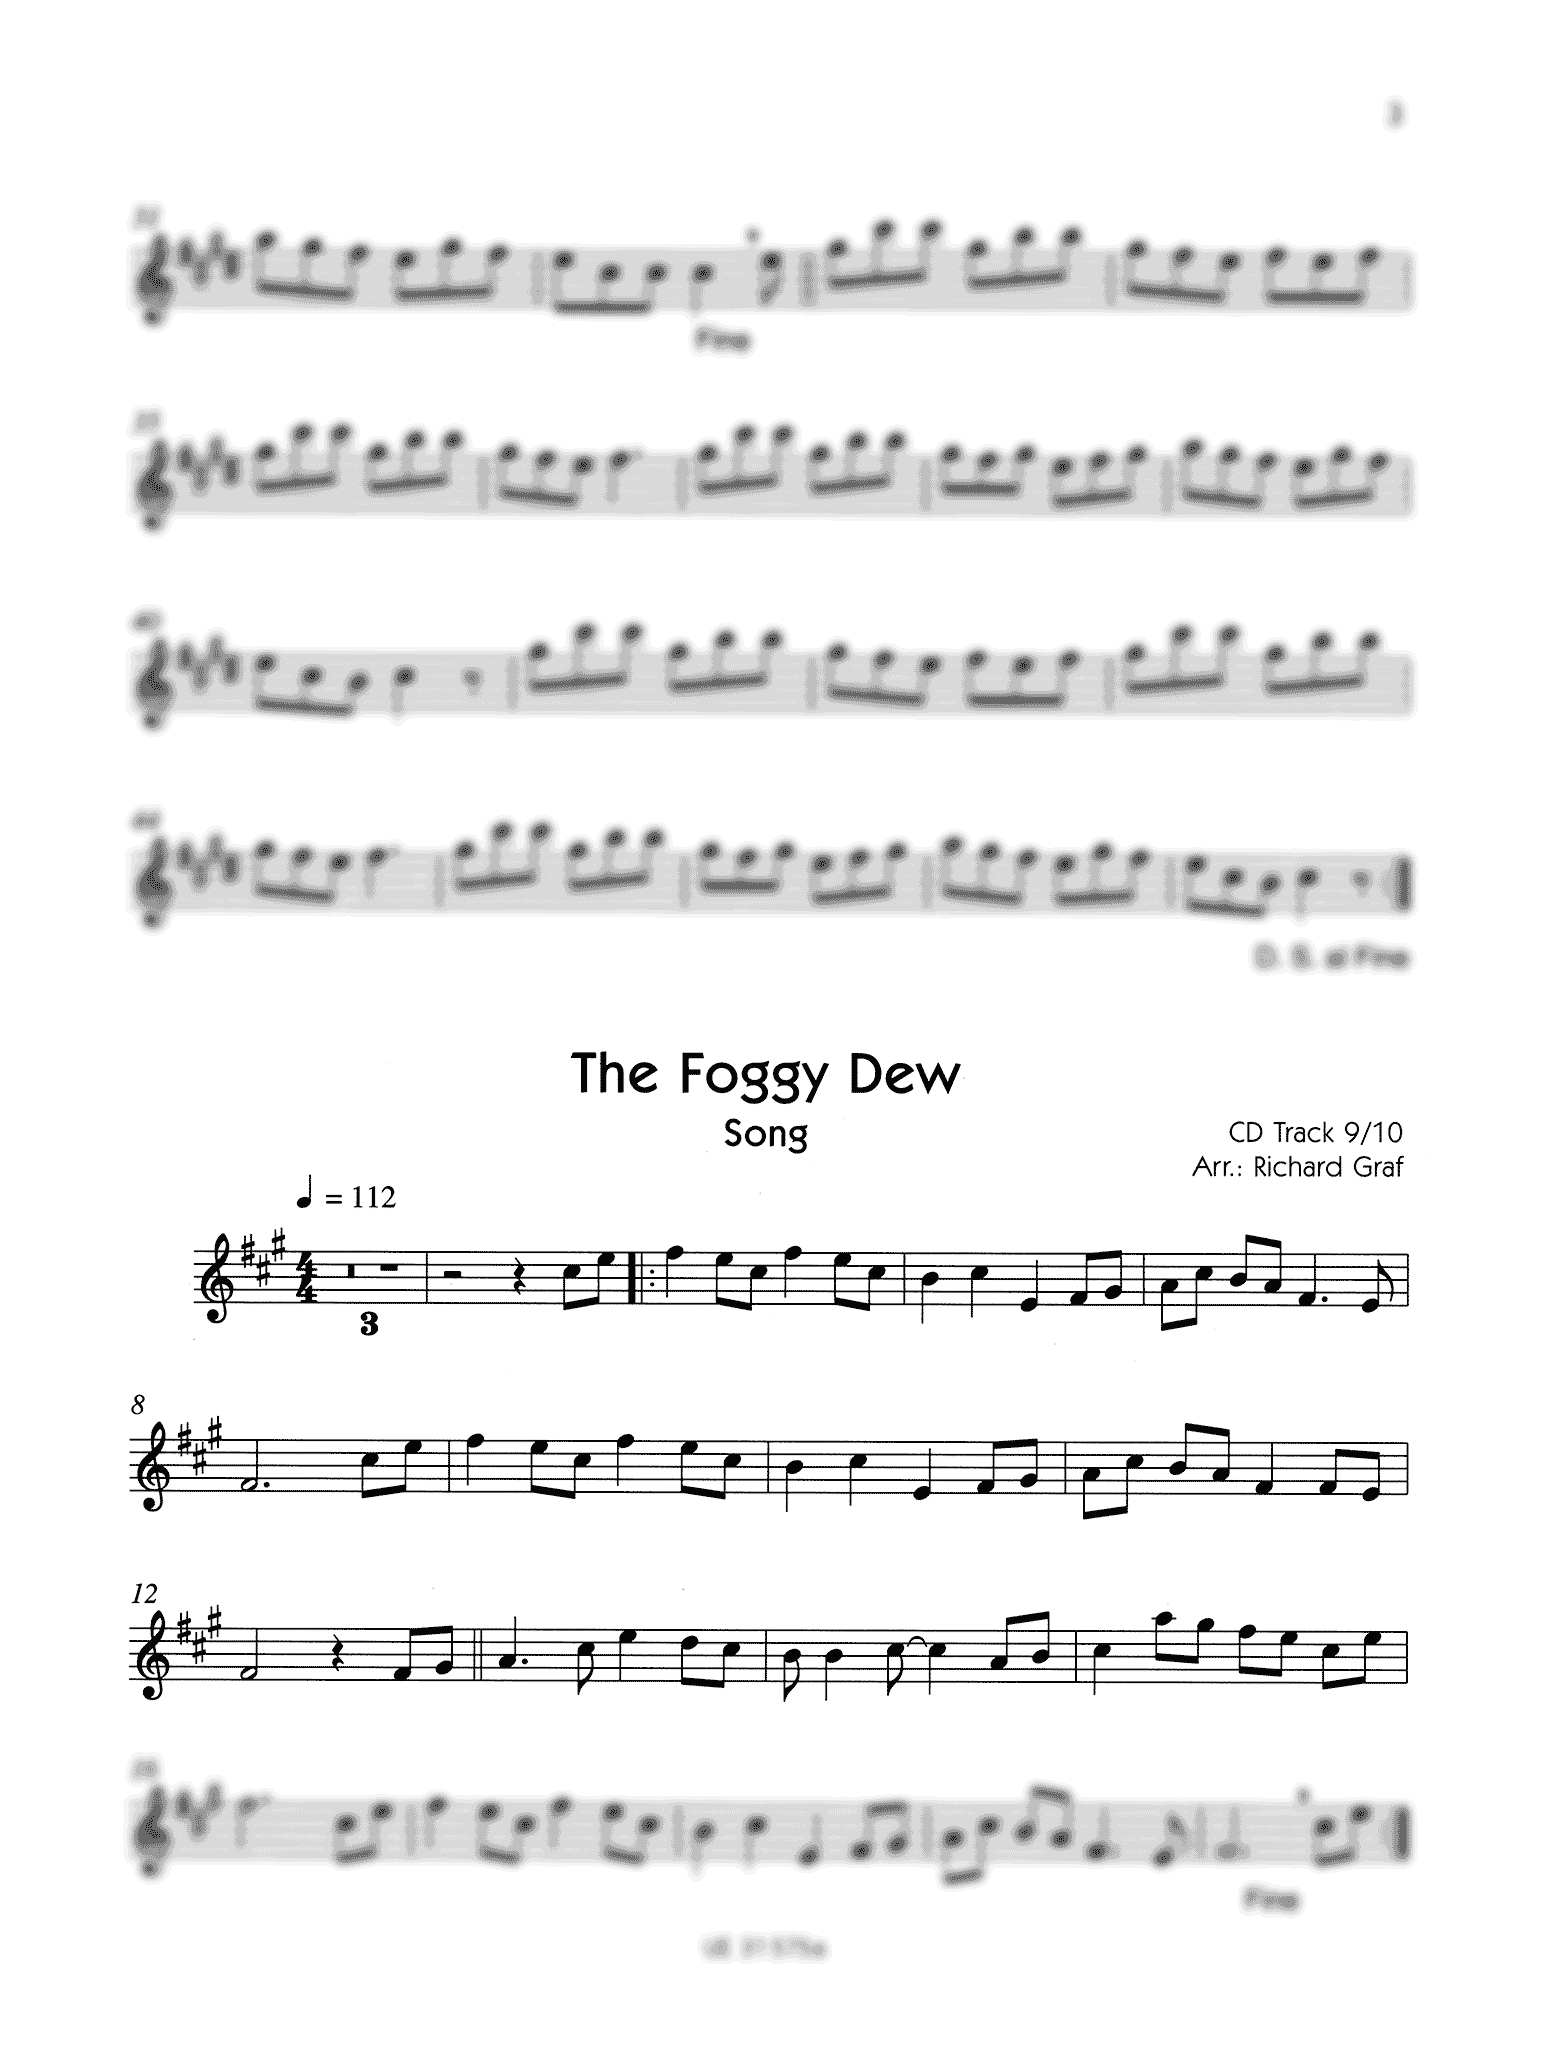 The Foggy Dew clarinet part